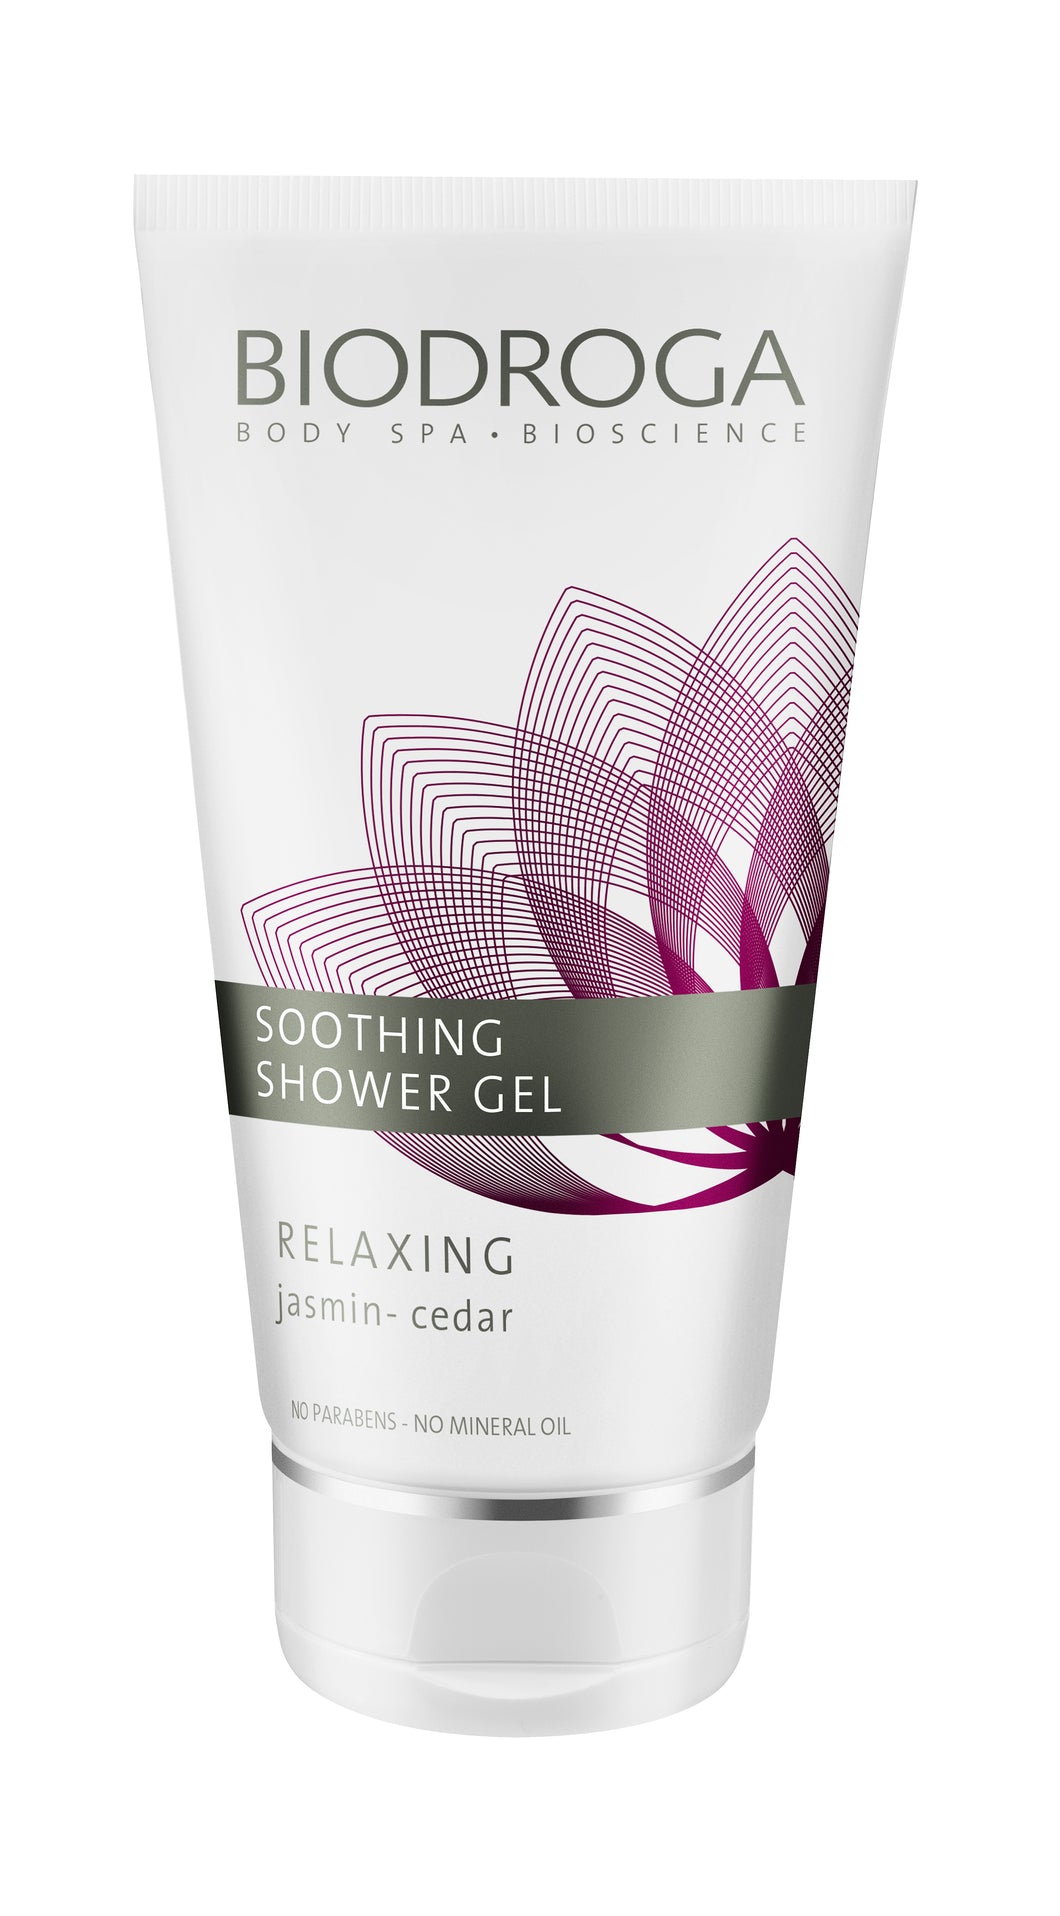 Body Spa Relaxing Soothing Shower Gel